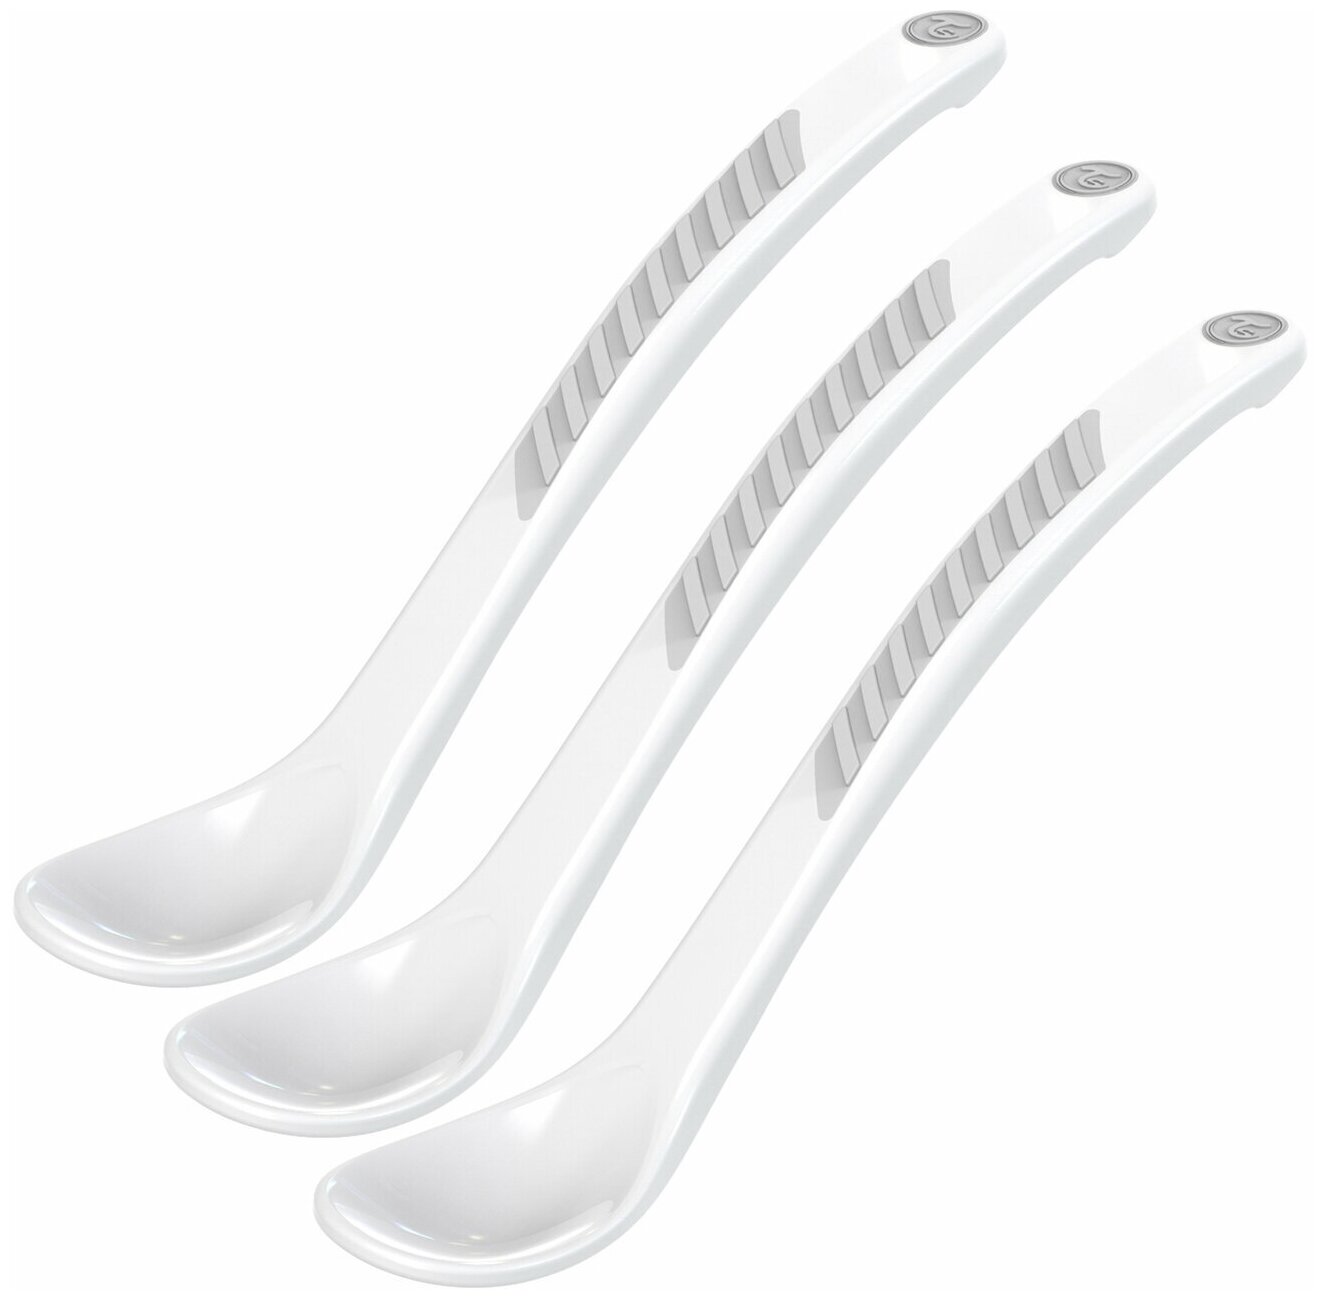 Ложки для кормления Twistshake (Feeding Spoon) в наборе из 3 шт. Белый (White). Возраст 4+m. Арт. 78187